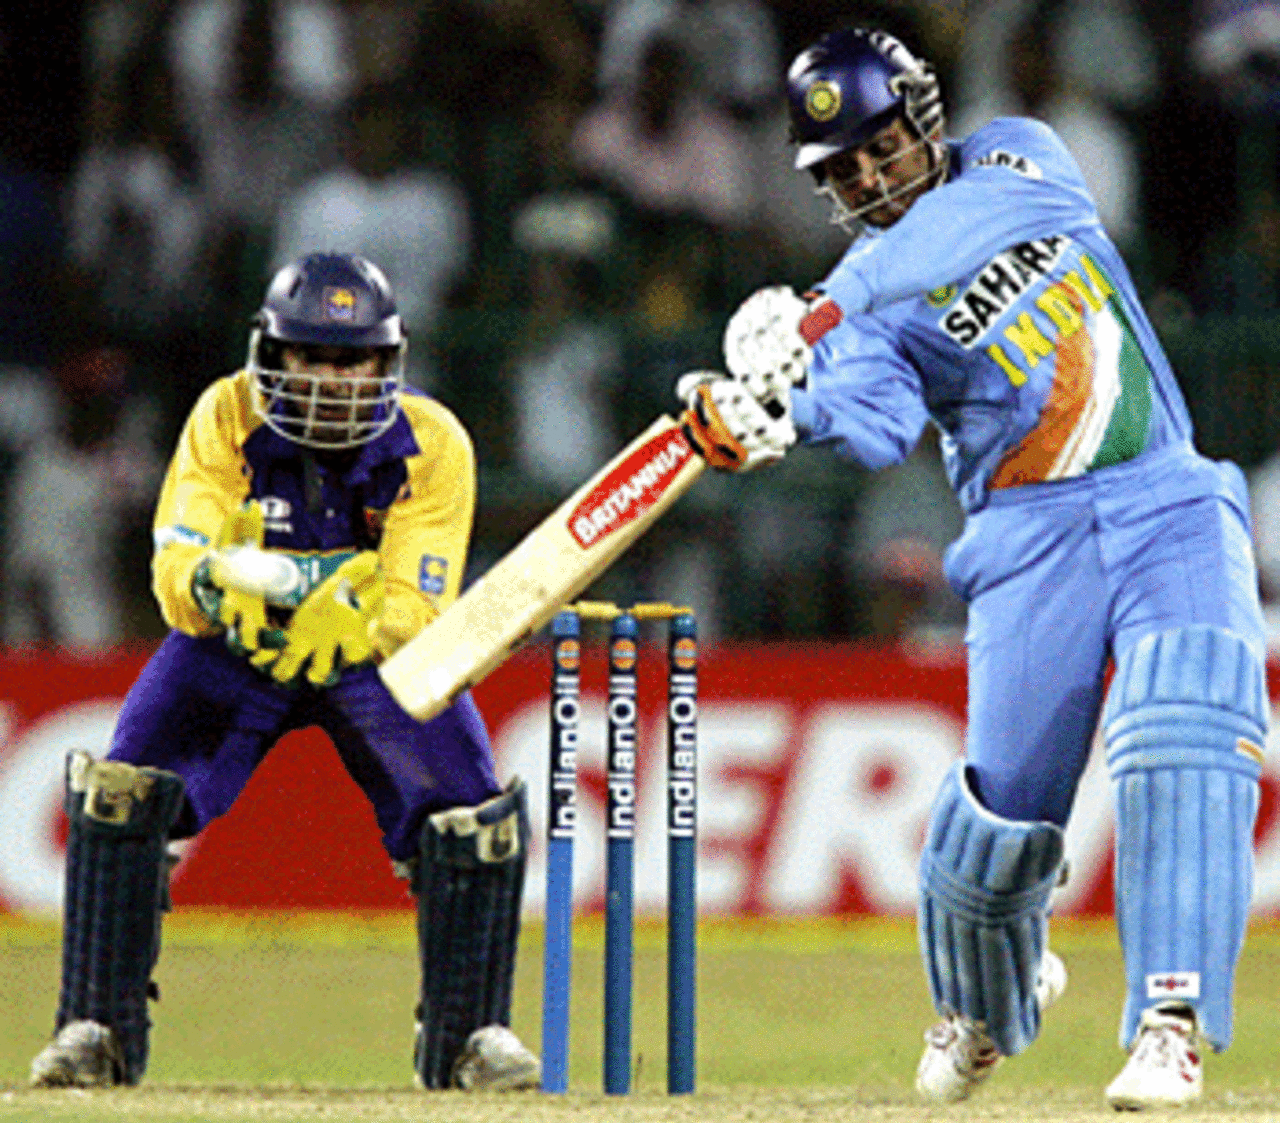 Virender Sehwag blasts one through the covers, India v Sri Lanka, Premadasa Stadium, August 9, 2005